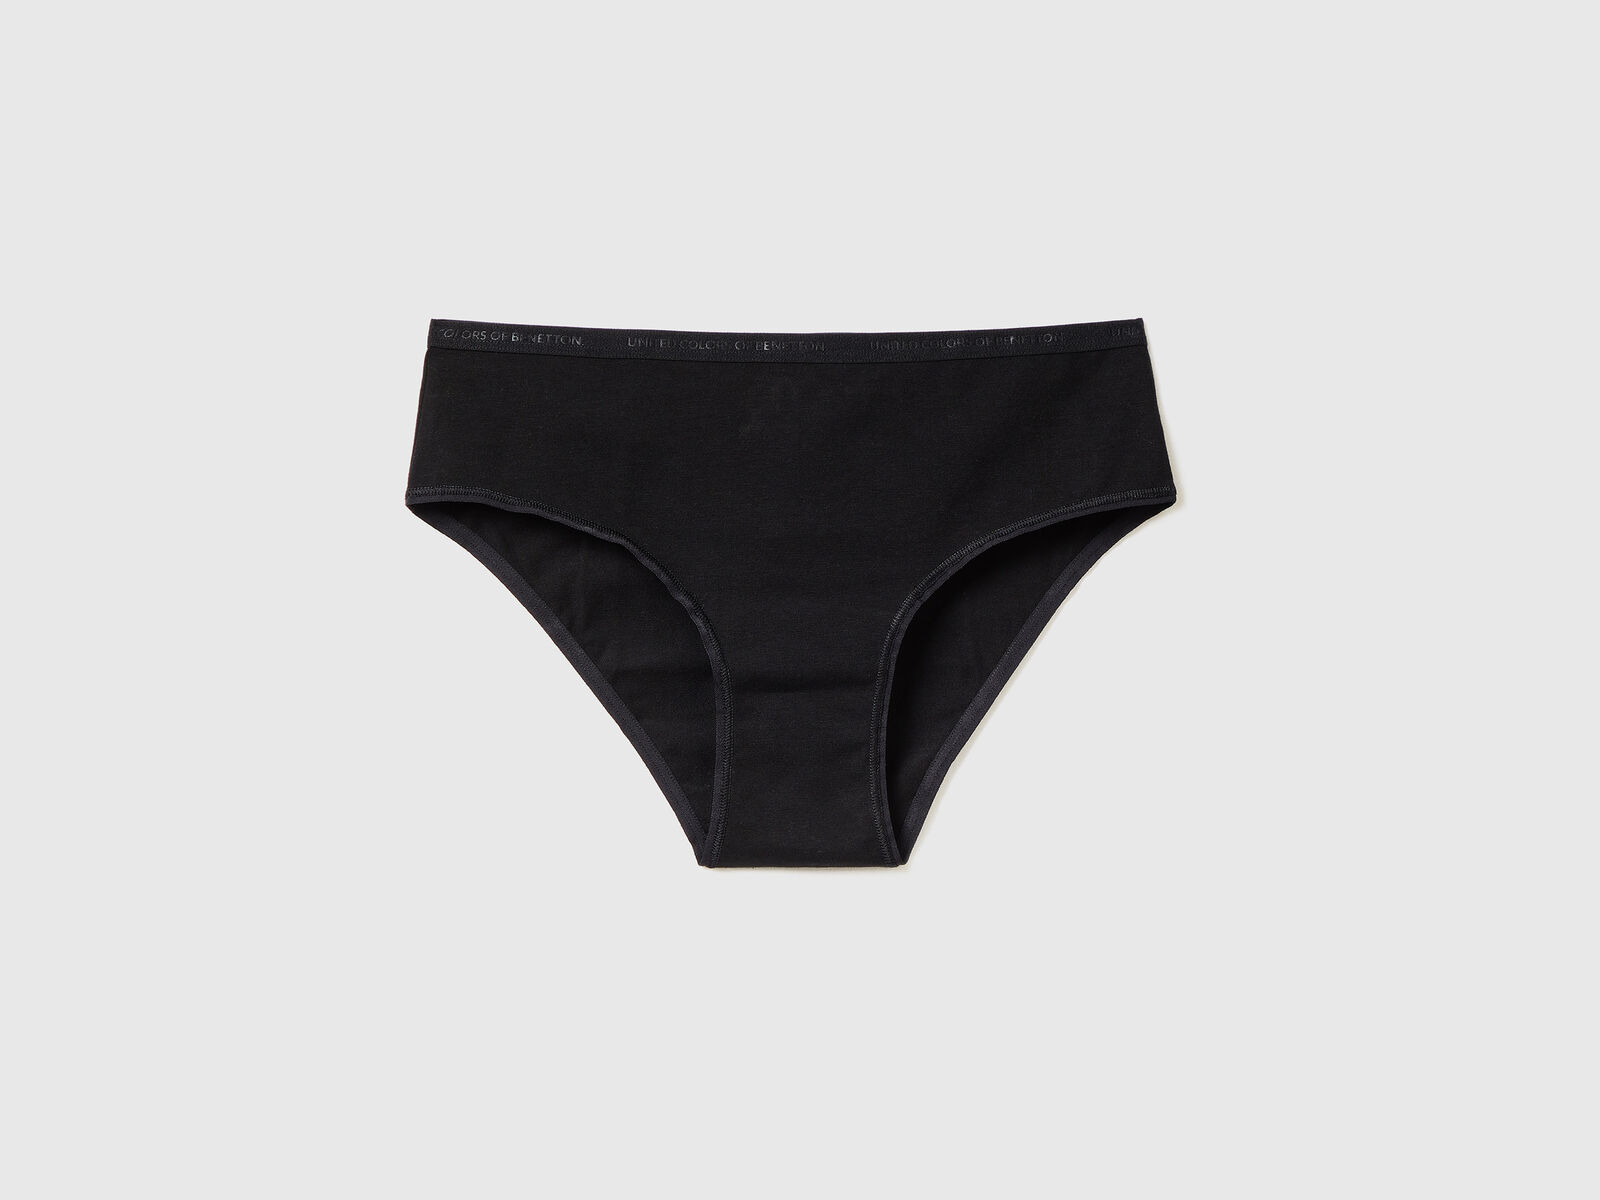 Benetton High-rise Underwear In Organic Cotton in Black